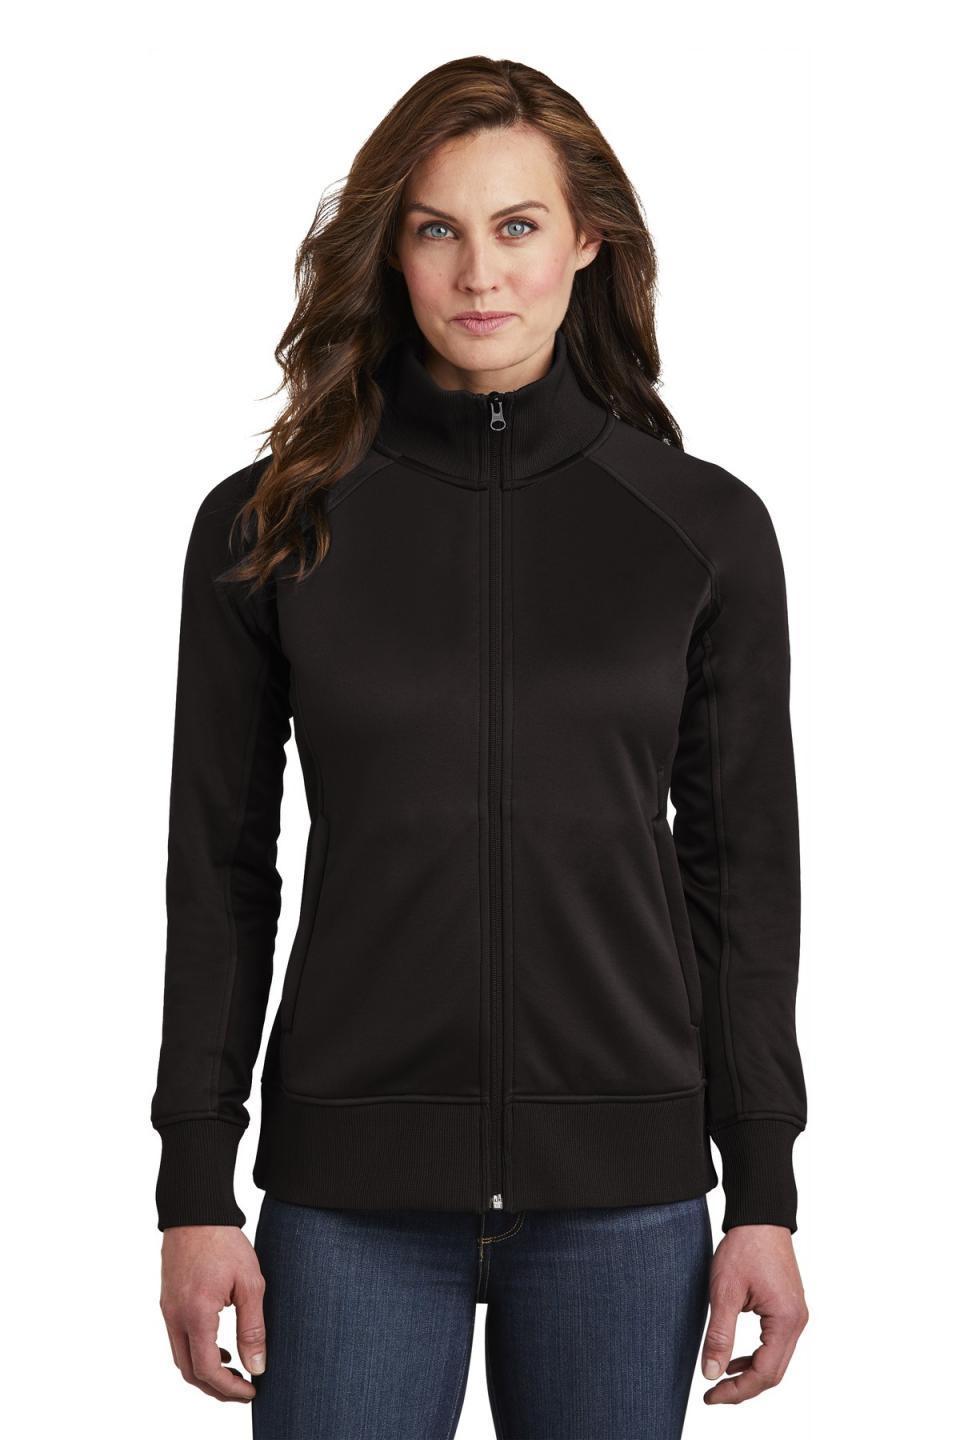 The North Face Women's Tech Full-Zip Fleece Jacket